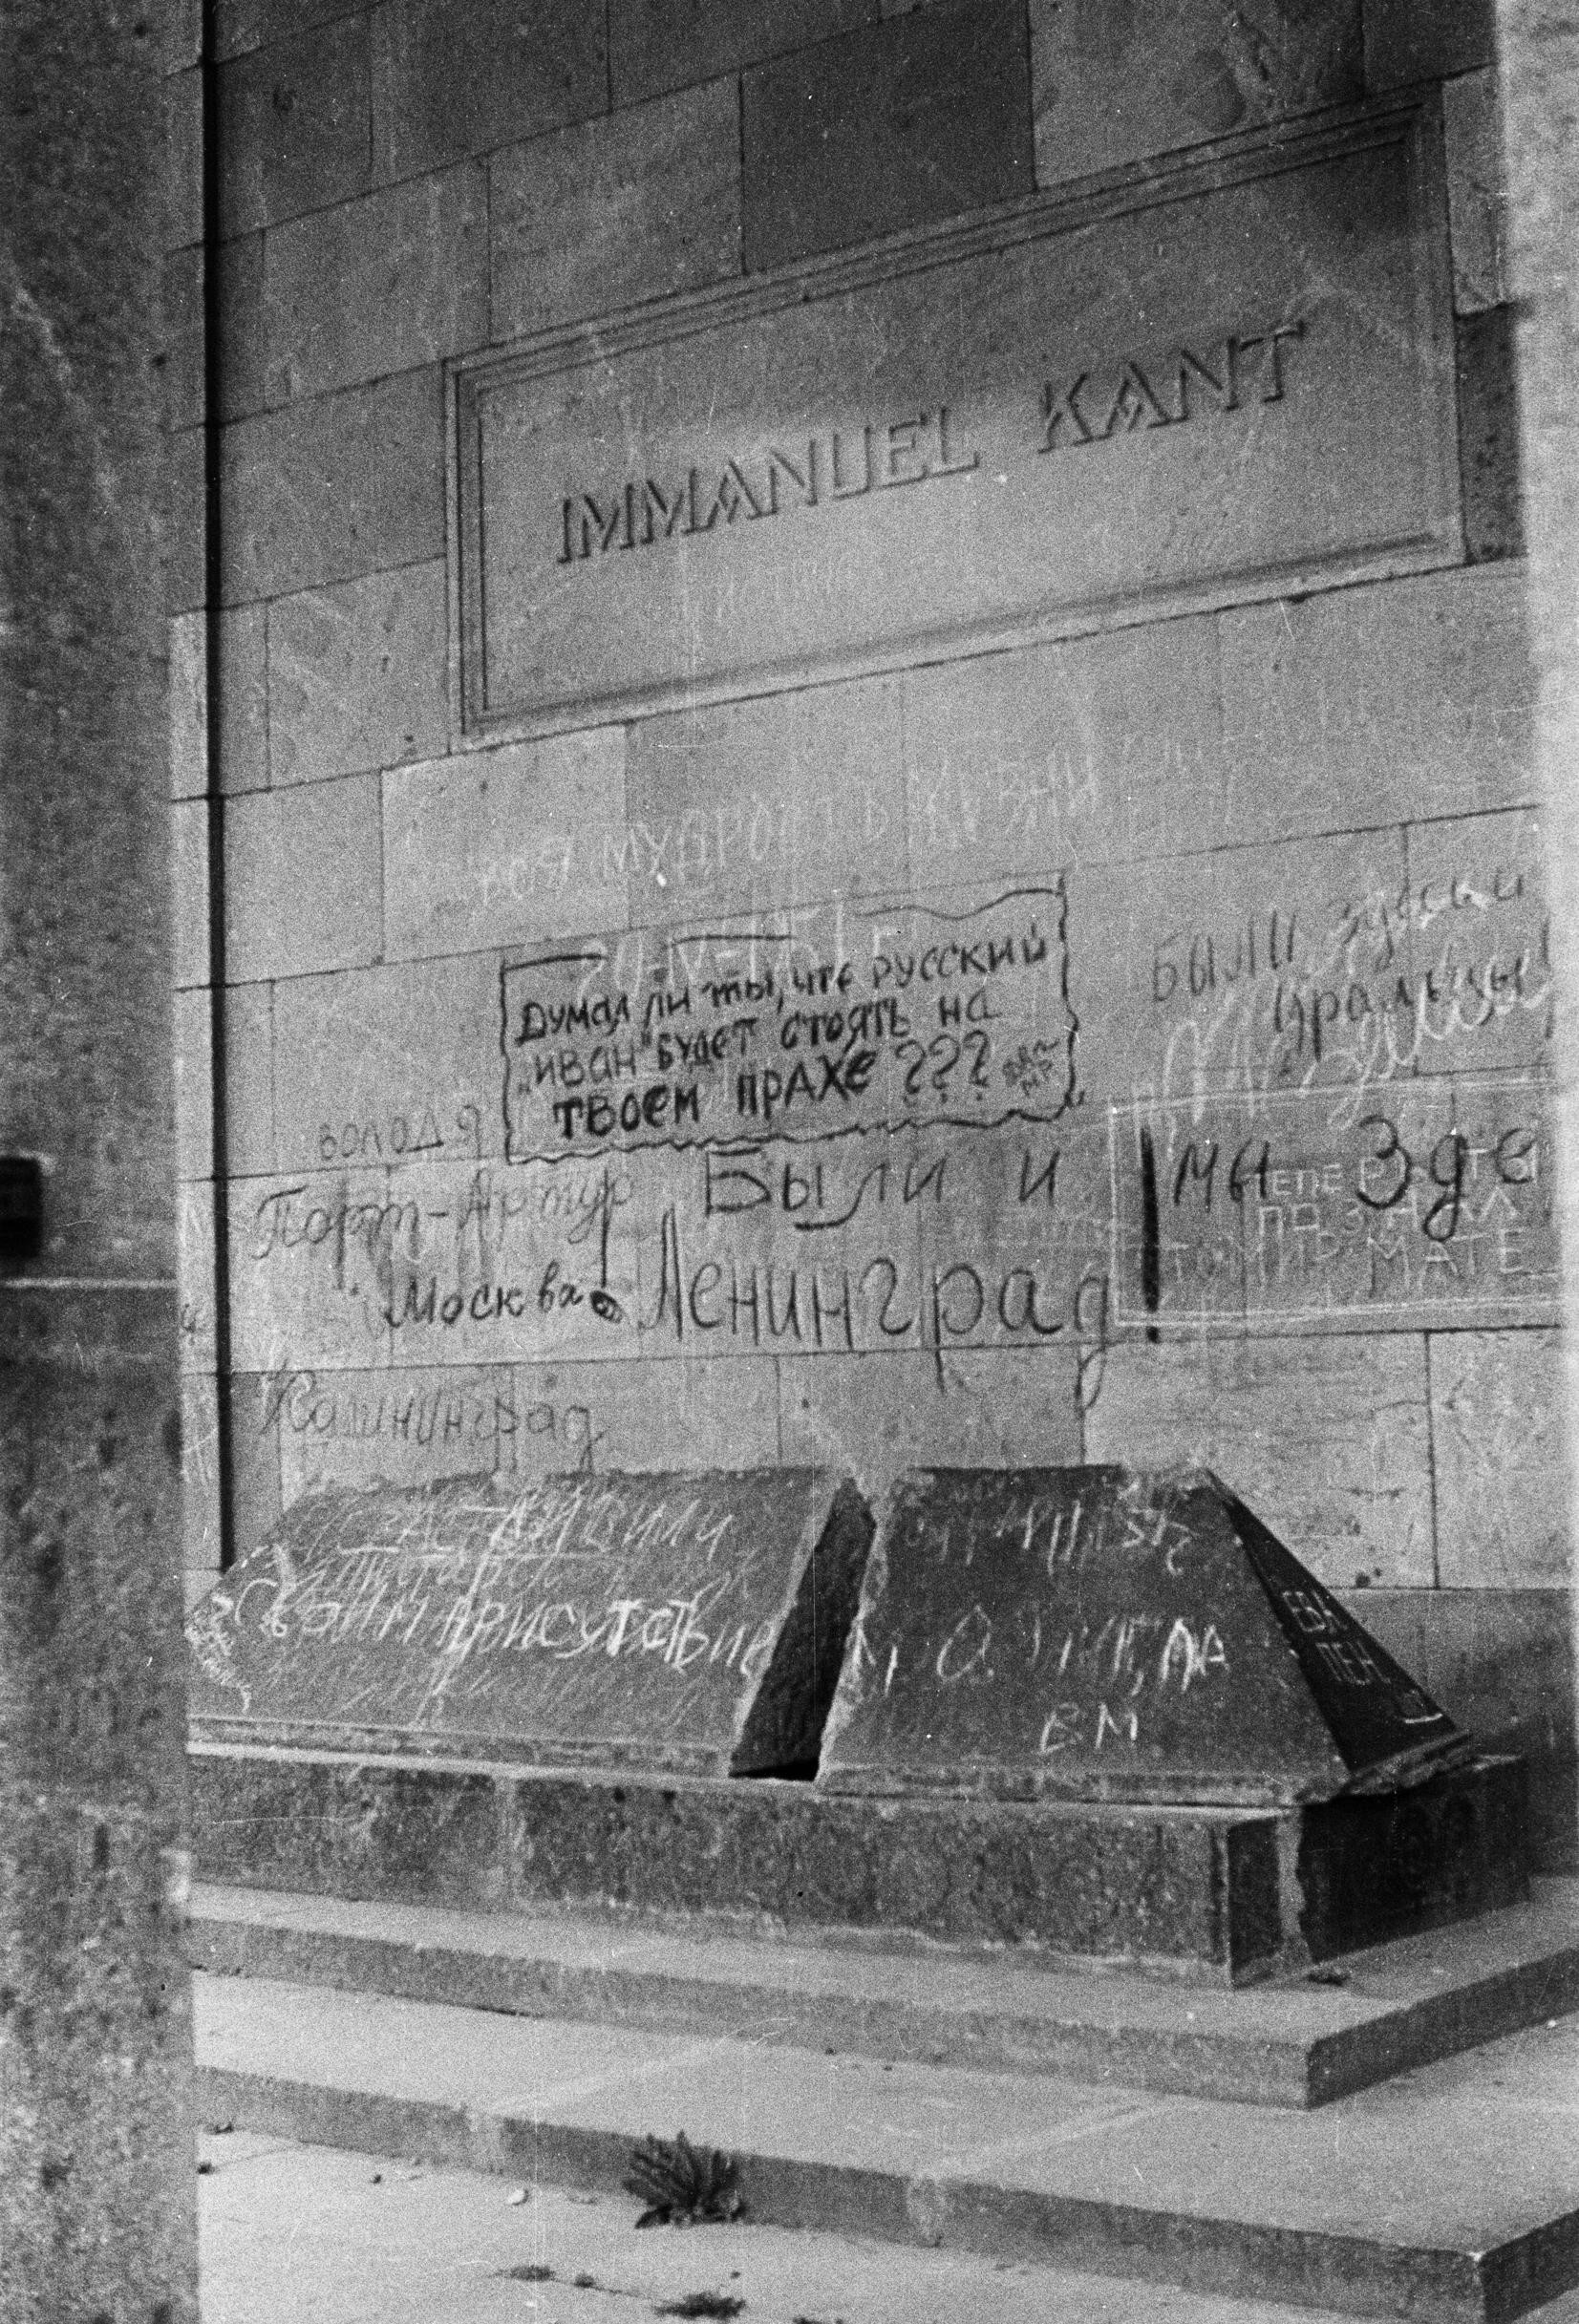 Кант похоронен. Могила Канта в Калининграде 1945. Кёнигсберг могила Канта 1945. Могила Иммануила Канта 1945. Могила Канта в Кенигсберге.